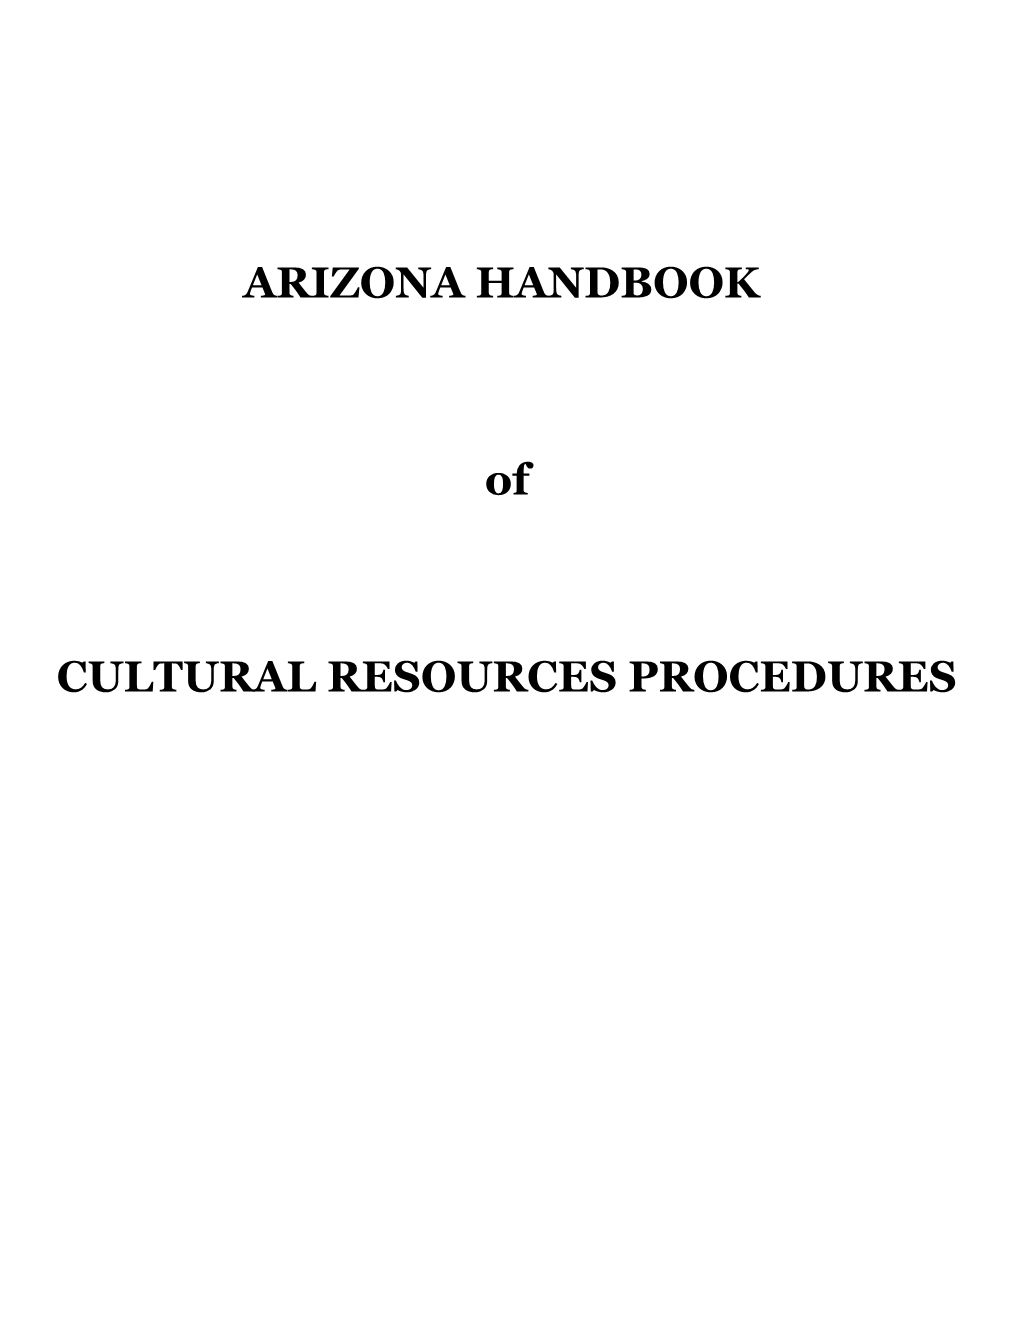 Arizona Handbook of Cultural Resources Procedures